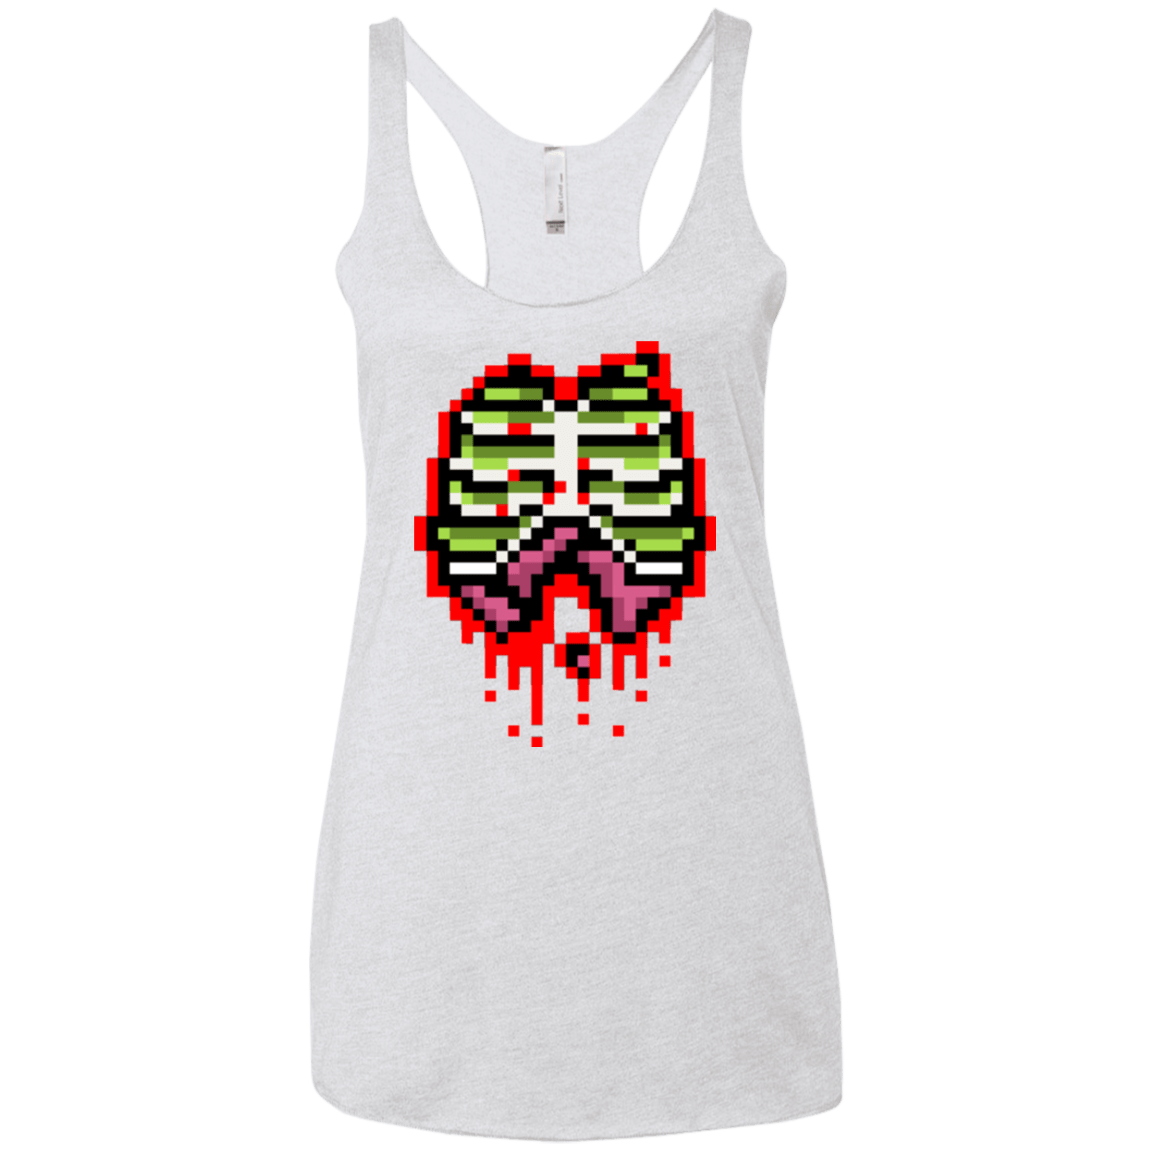 T-Shirts Heather White / X-Small Zombie Guts Women's Triblend Racerback Tank